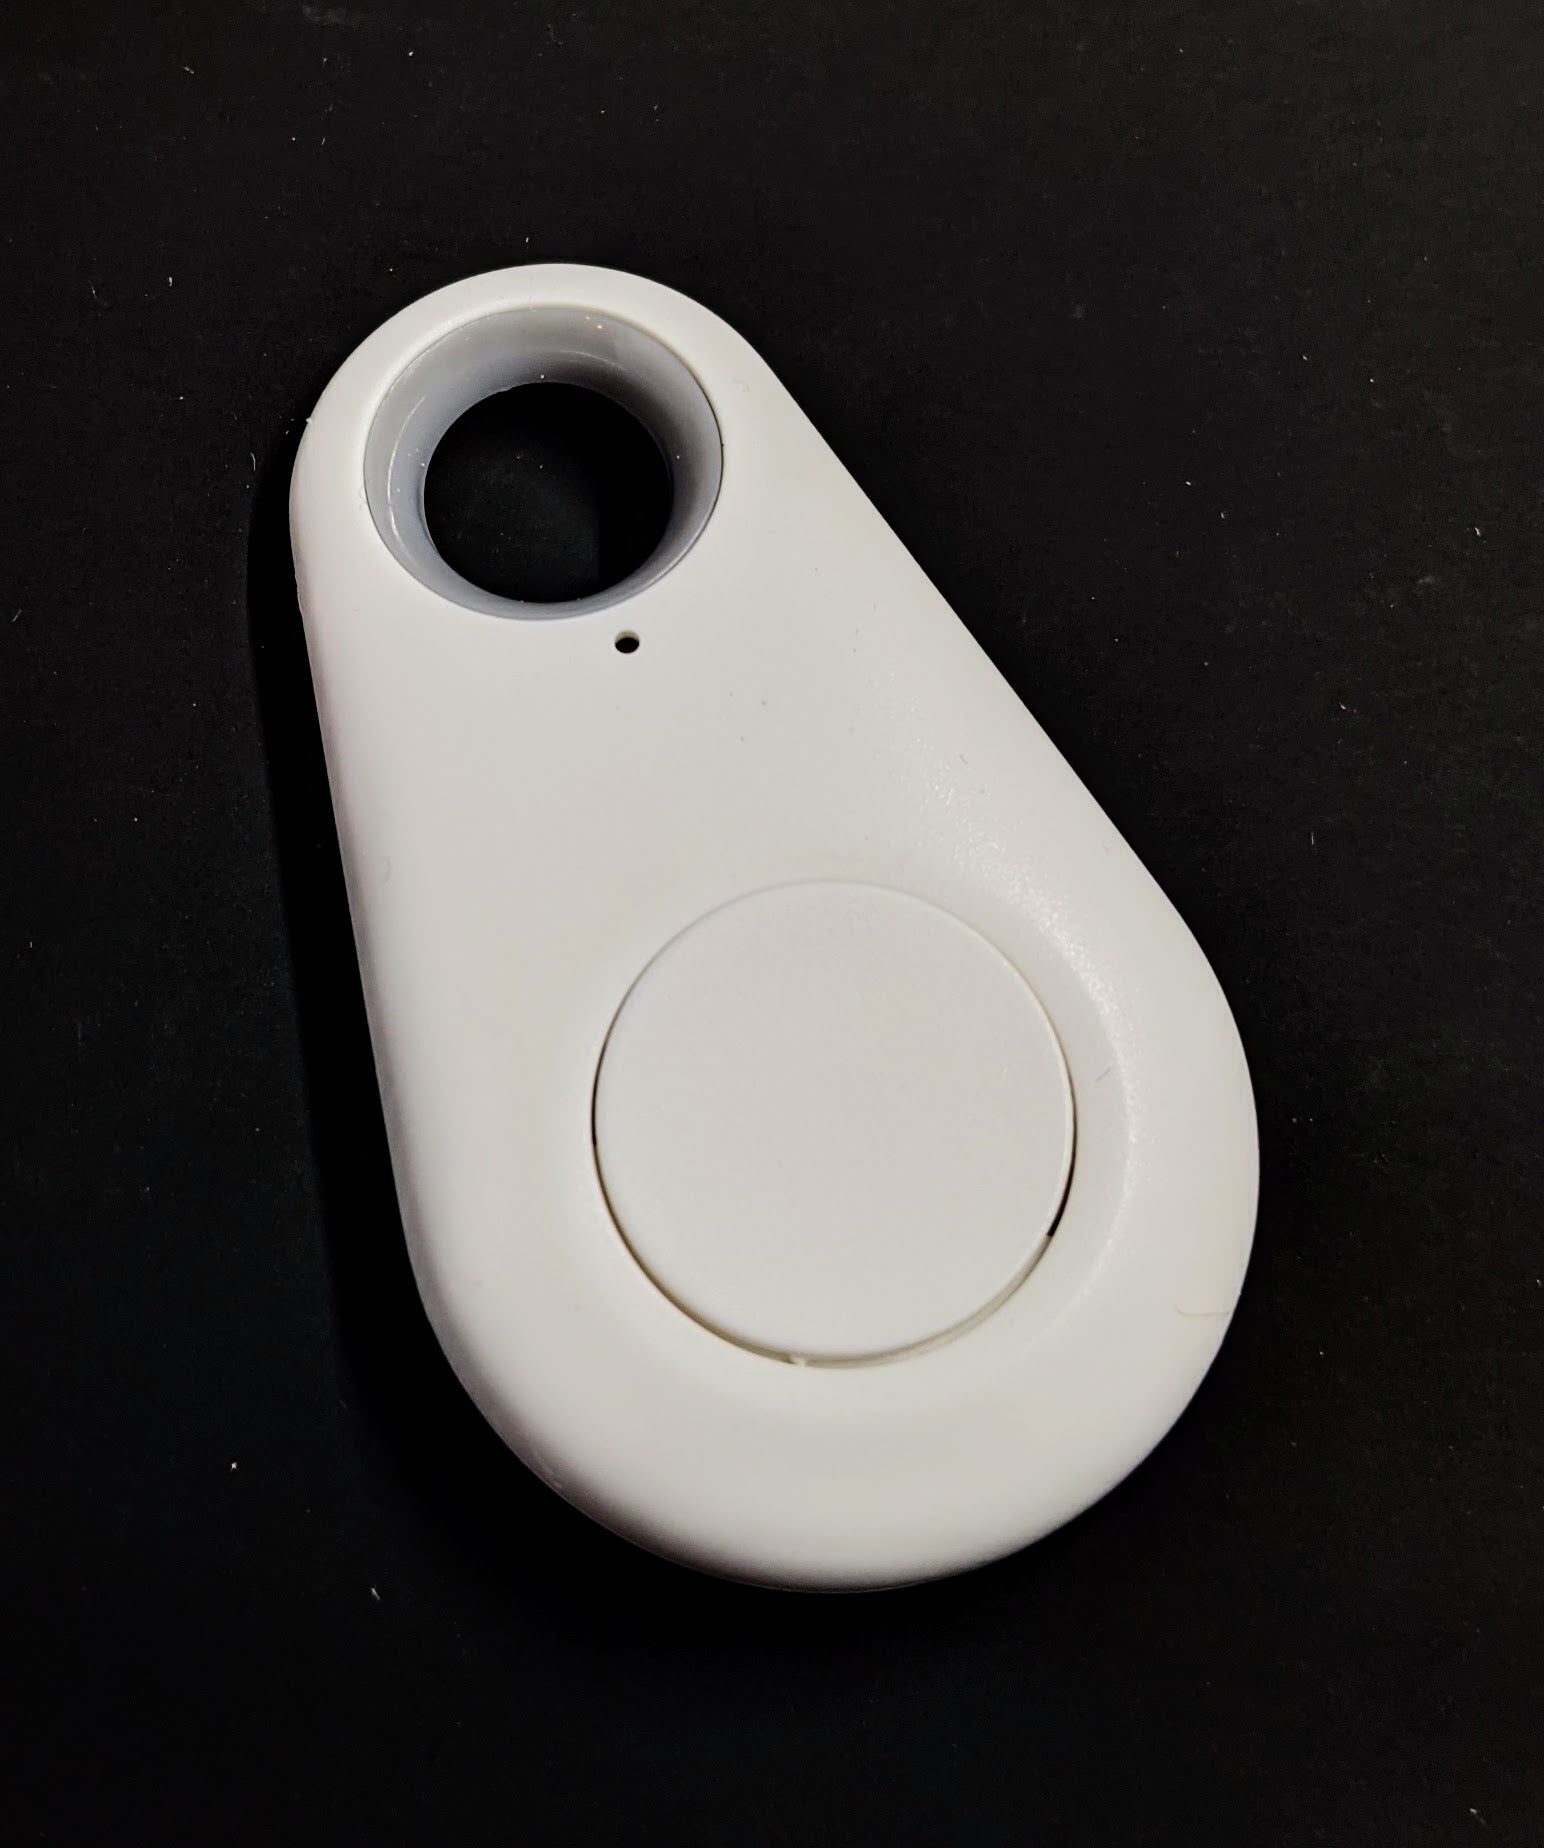 SHOTBOX - Bluetooth Shutter Button Remote